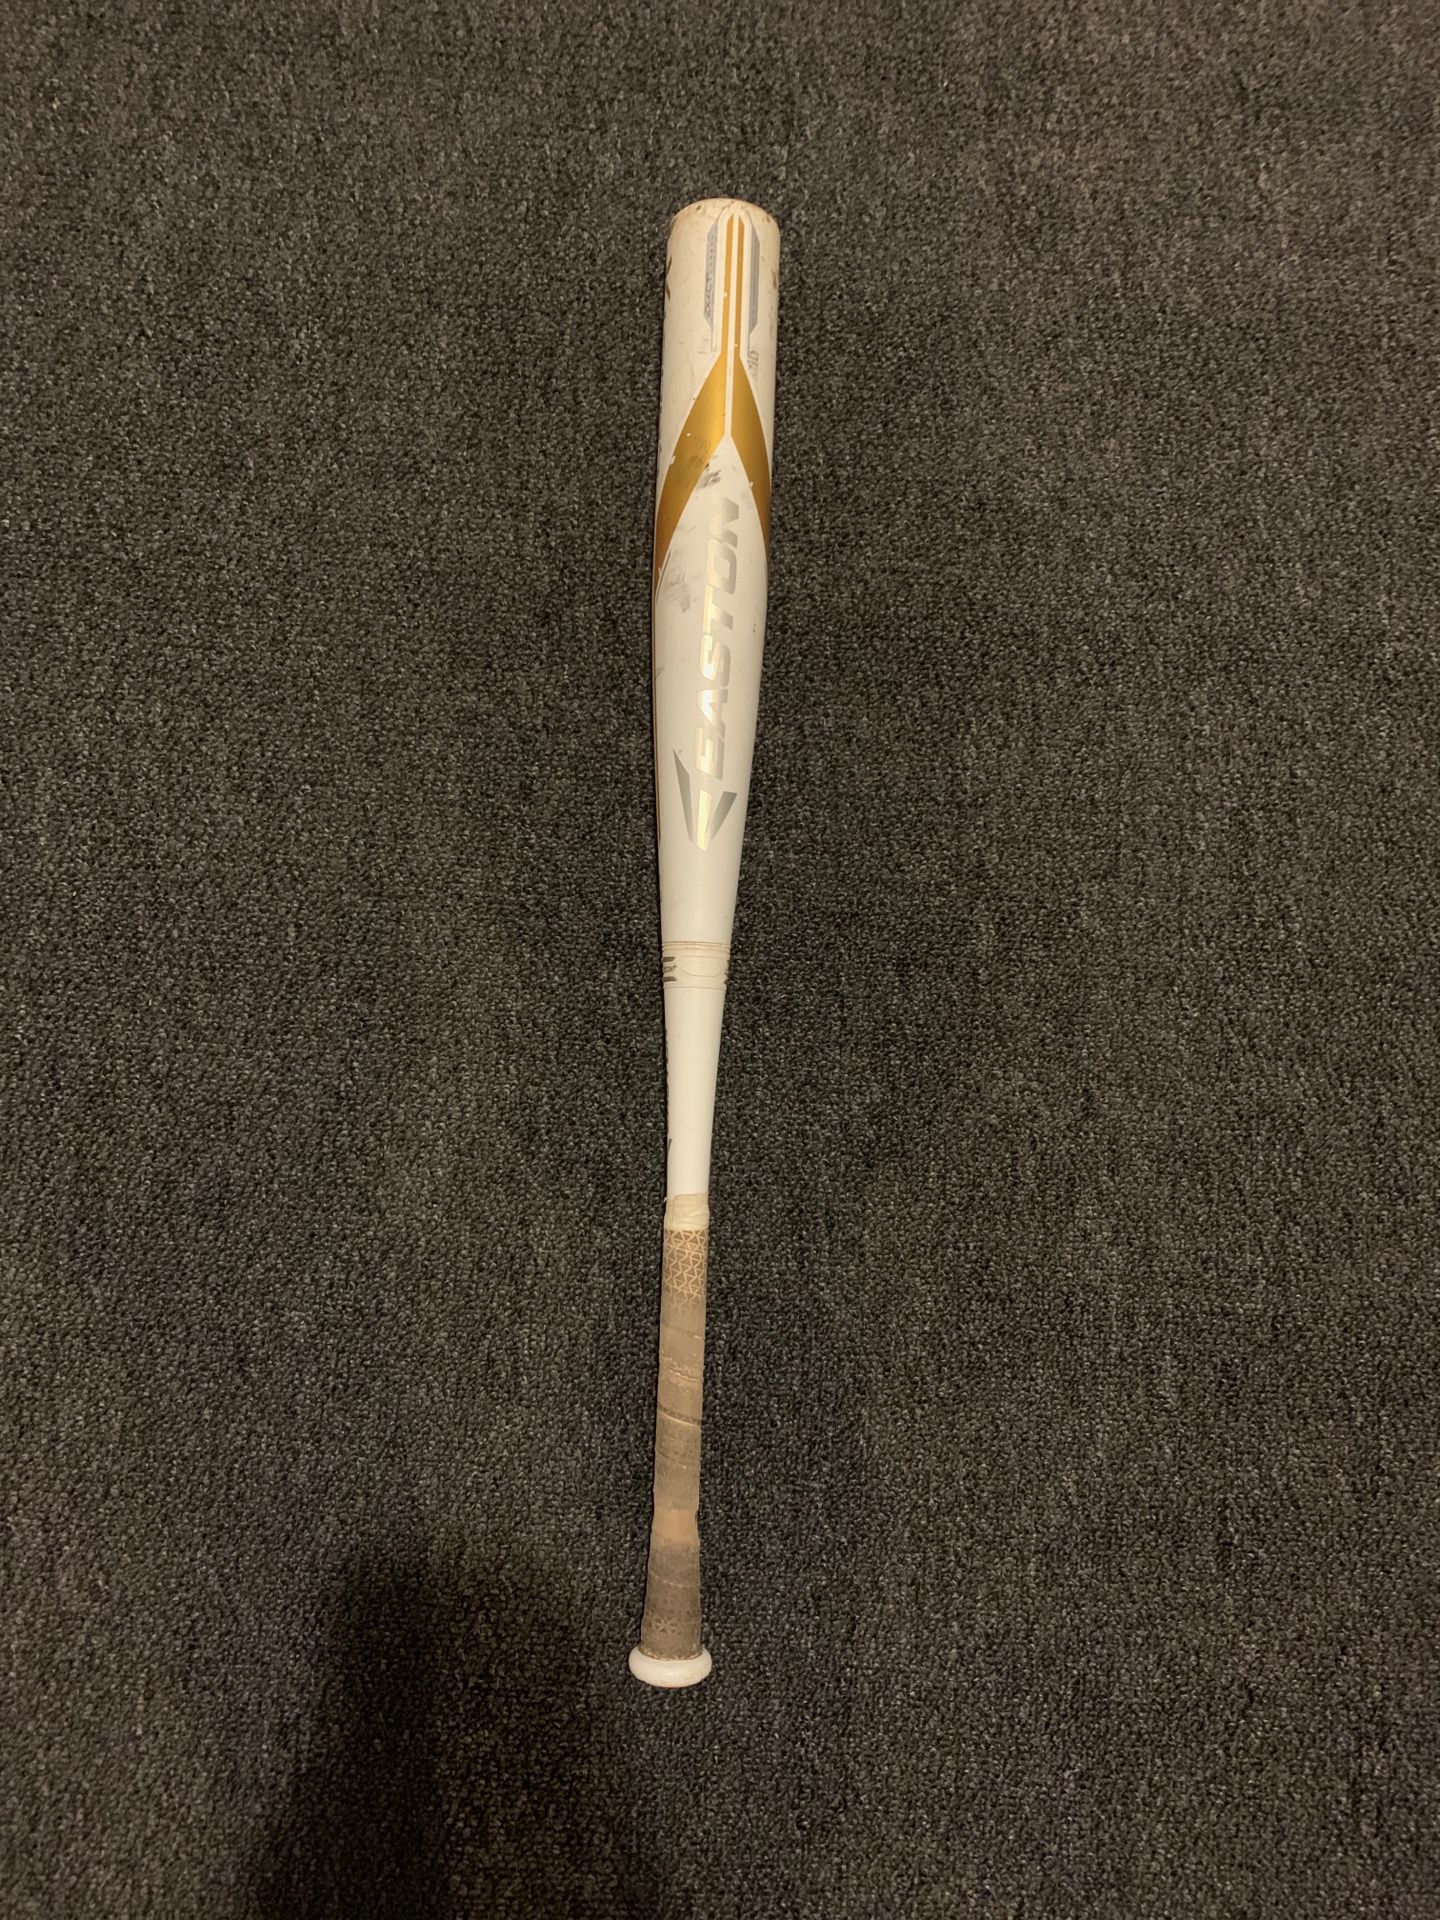 Ghost X baseball bat